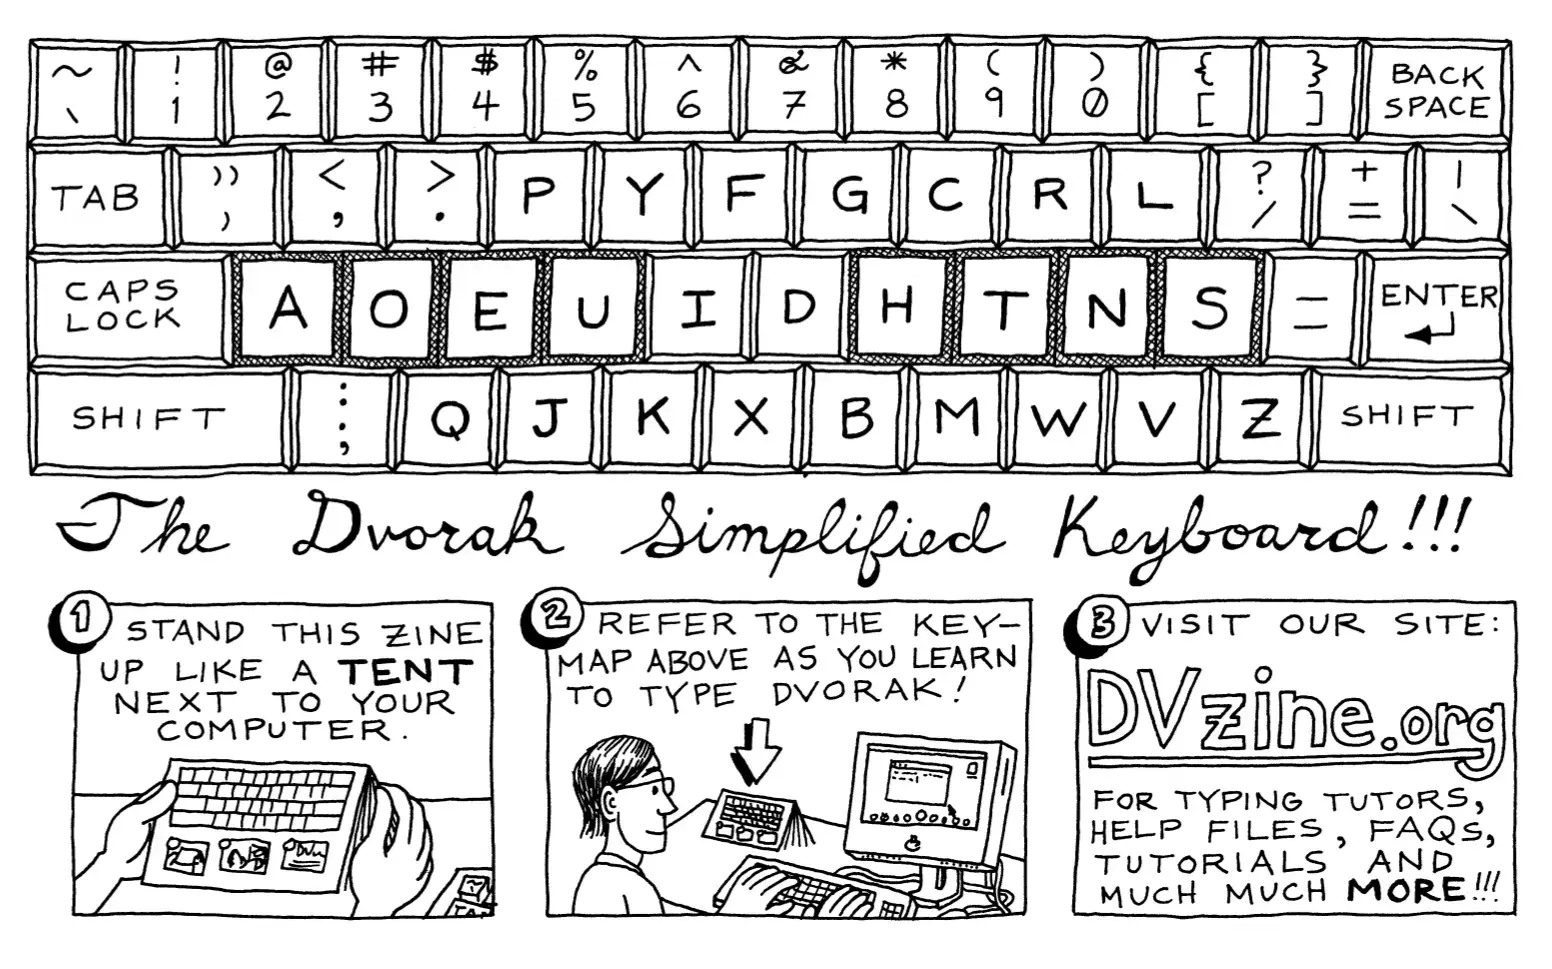 Dvorak keyboard layout.